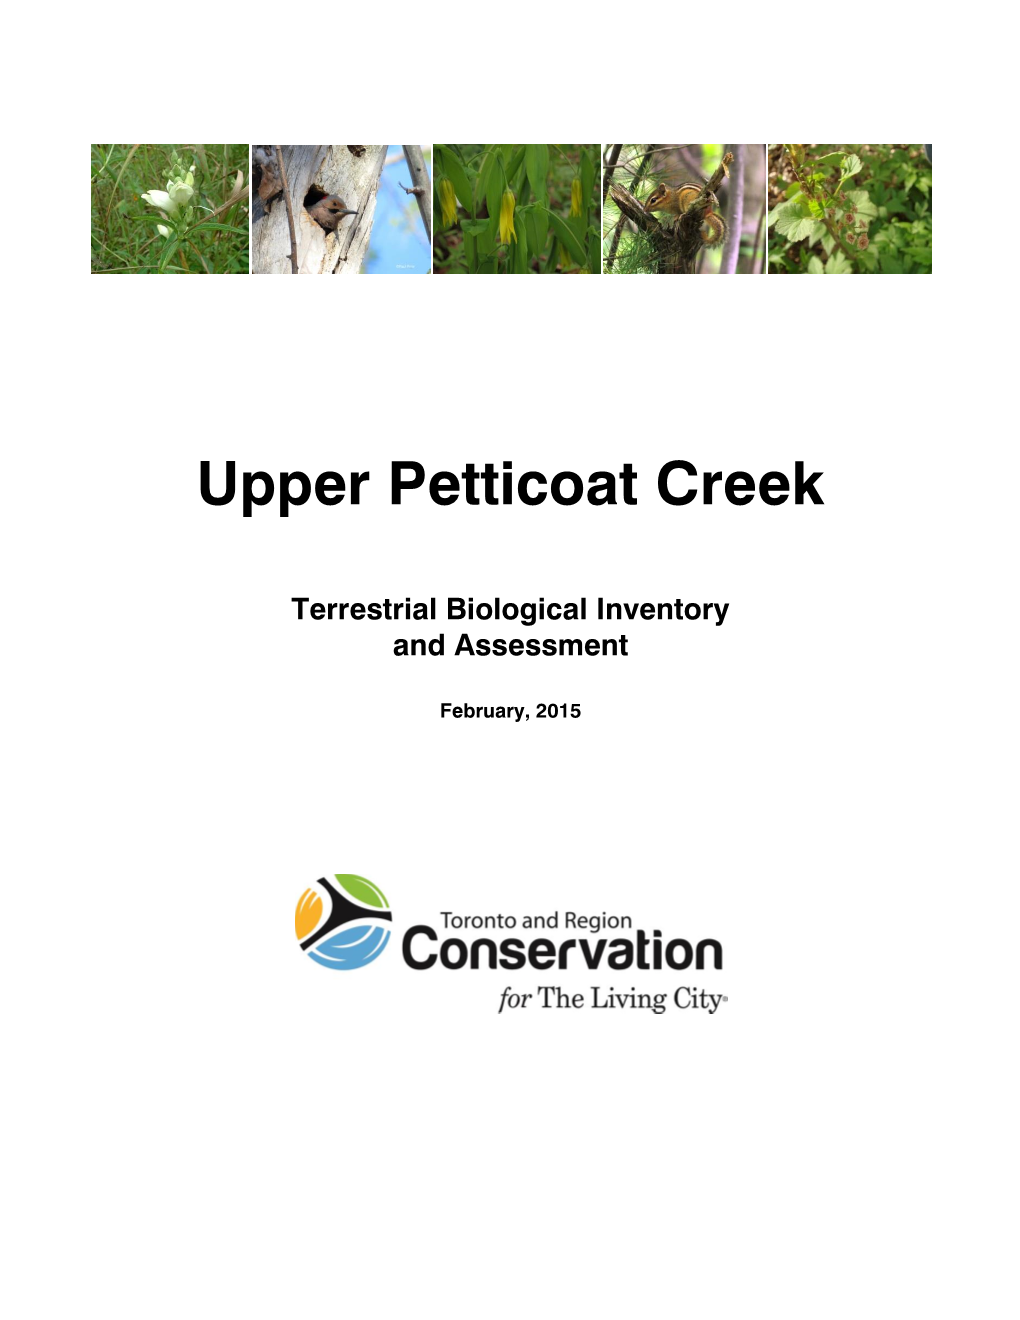 Upper Petticoat Creek Terrestrial Biological Inventory And